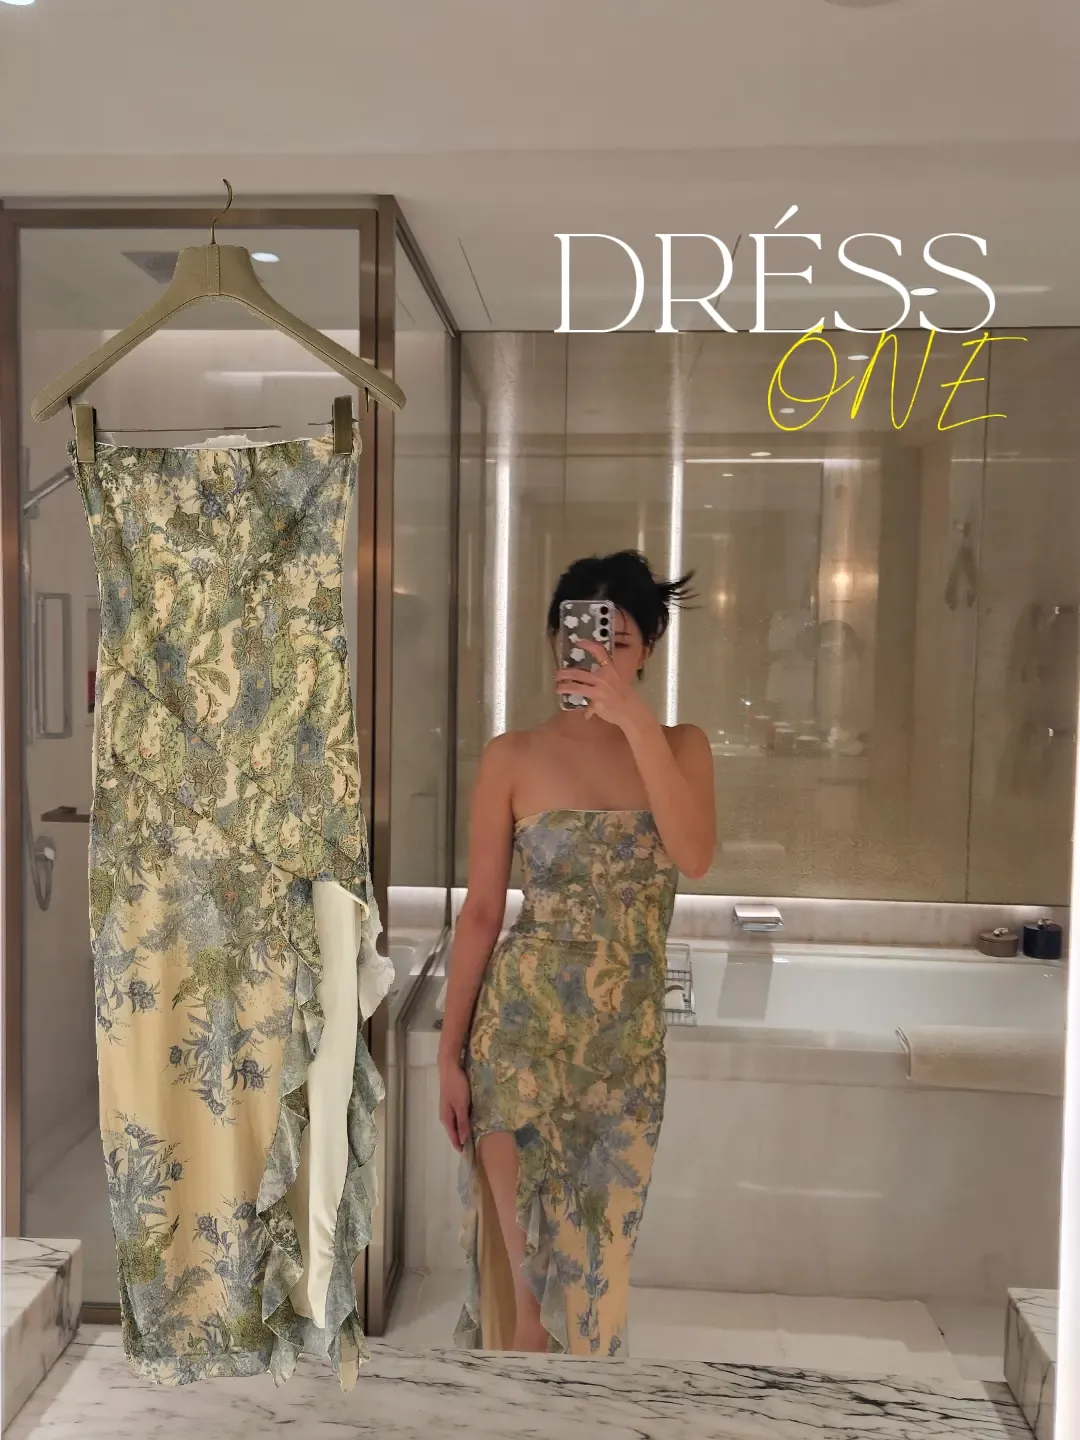 Buy Venus Lace Cut Out Midi Dress @ Love, Bonito Singapore, Shop Women's  Fashion Online